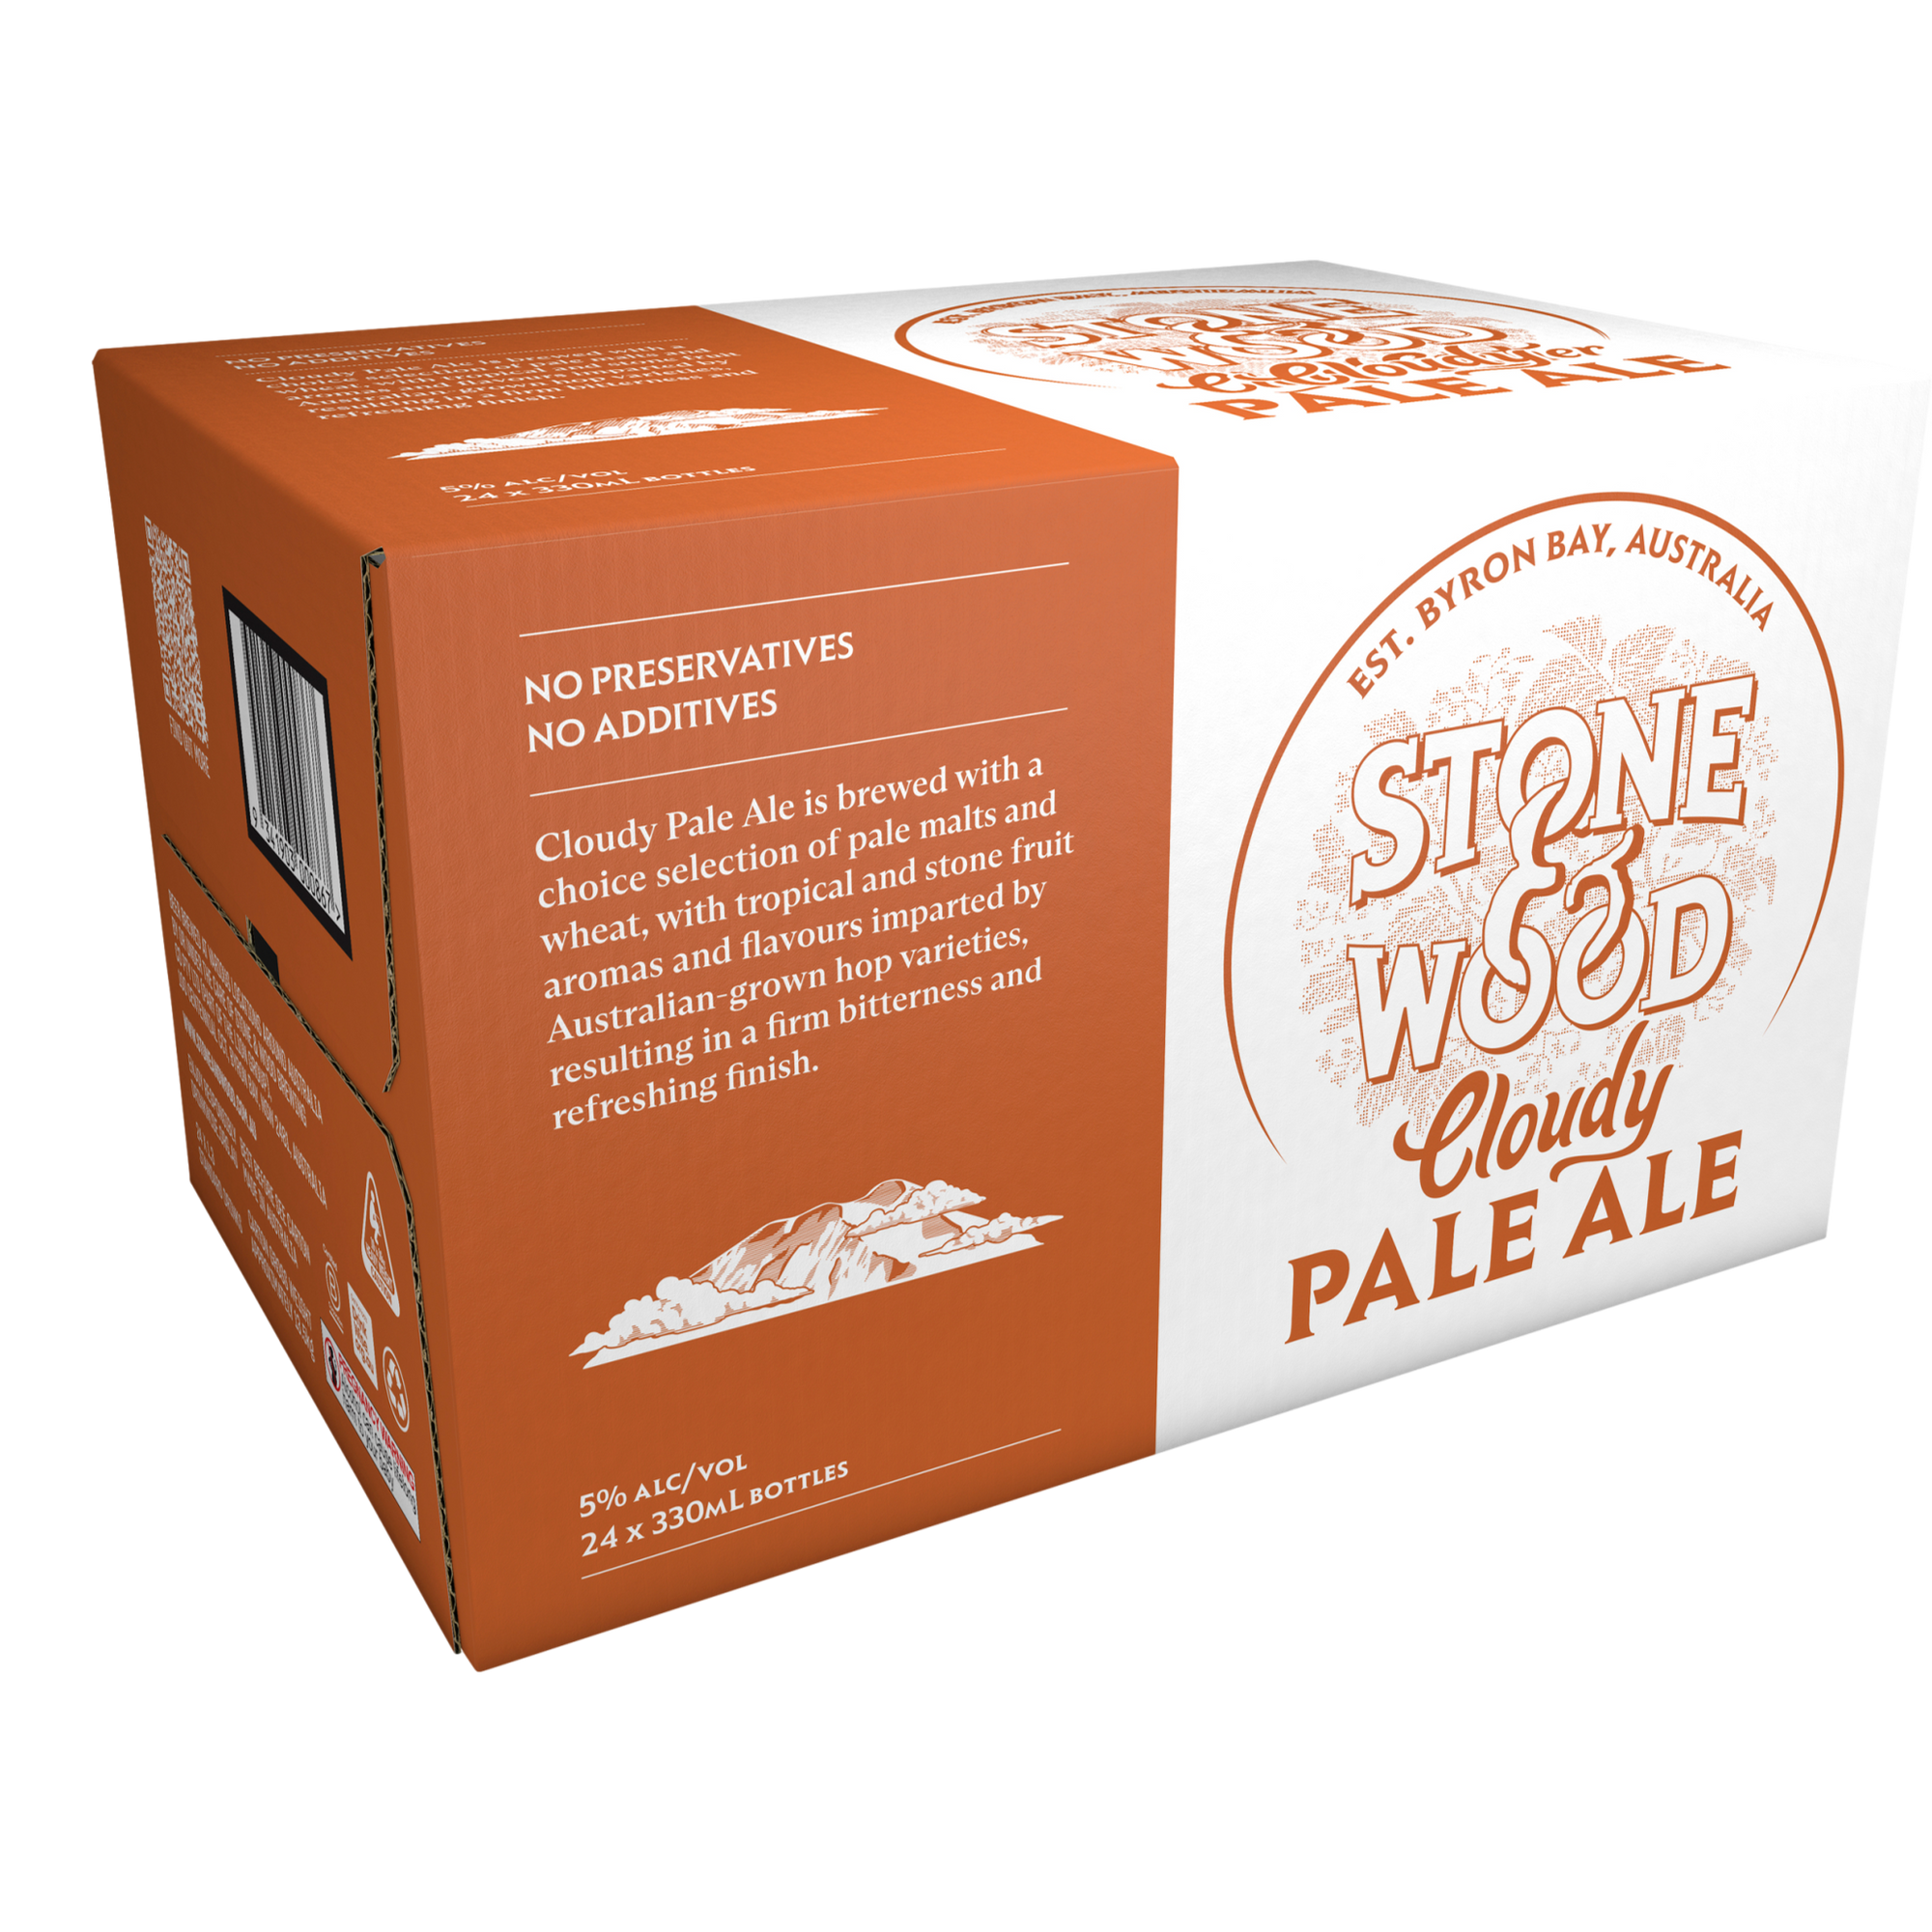 Stone & Wood Cloudy Pale Ale 330ml Bottle Case of 24